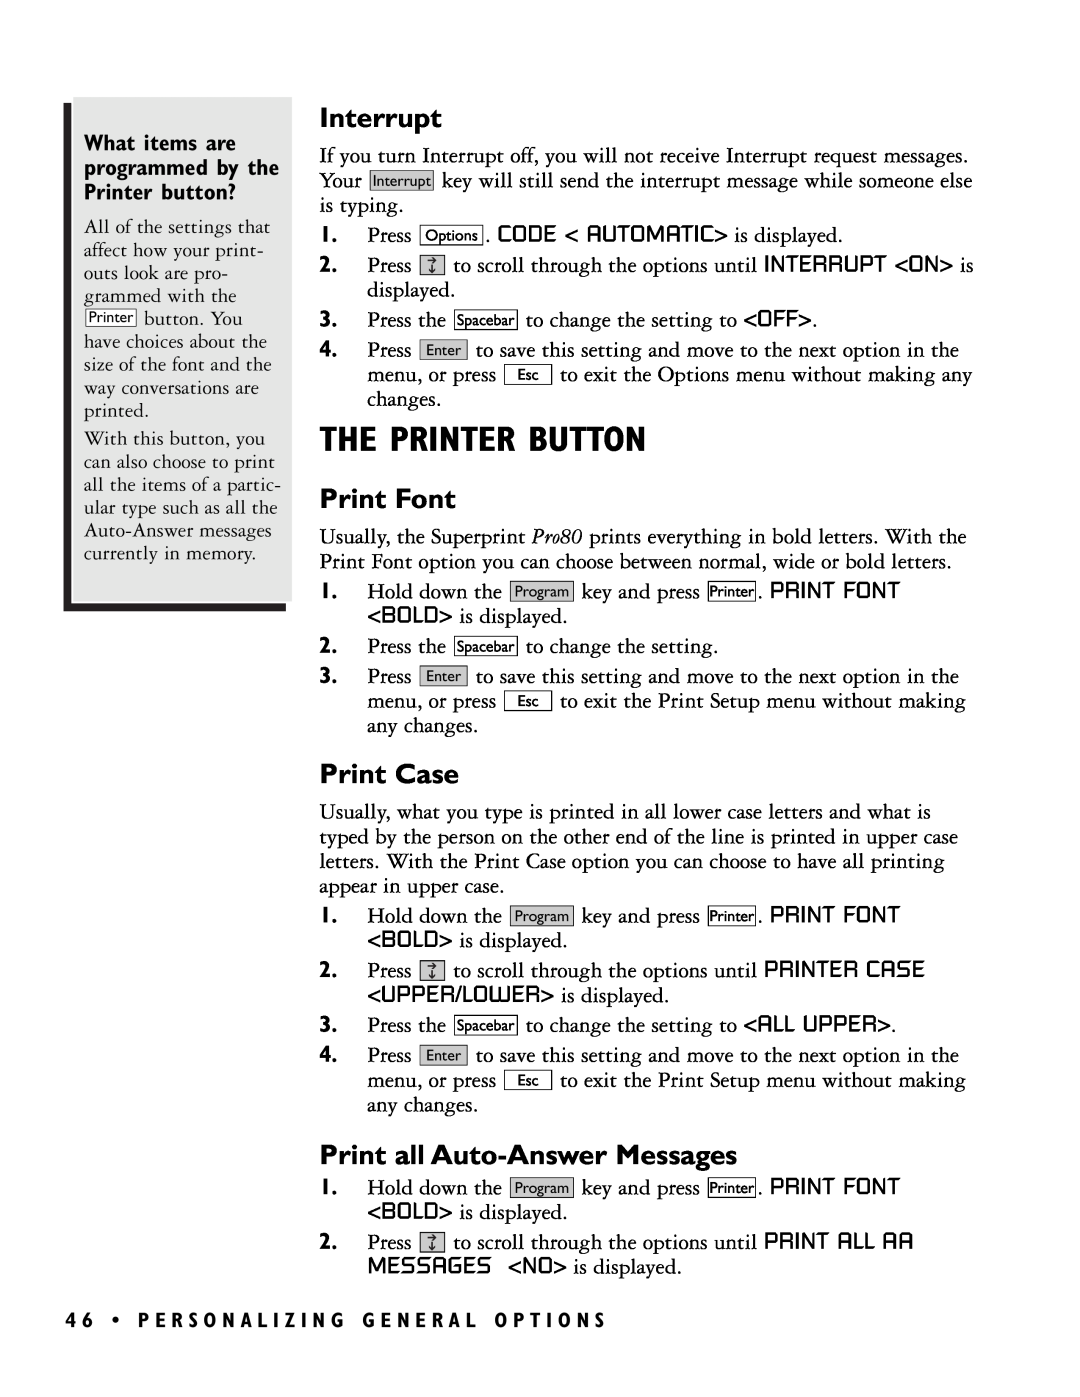 Ultratec PRO80TM manual The Printer Button, Interrupt, Print Font, Print Case, Print all Auto-Answer Messages 